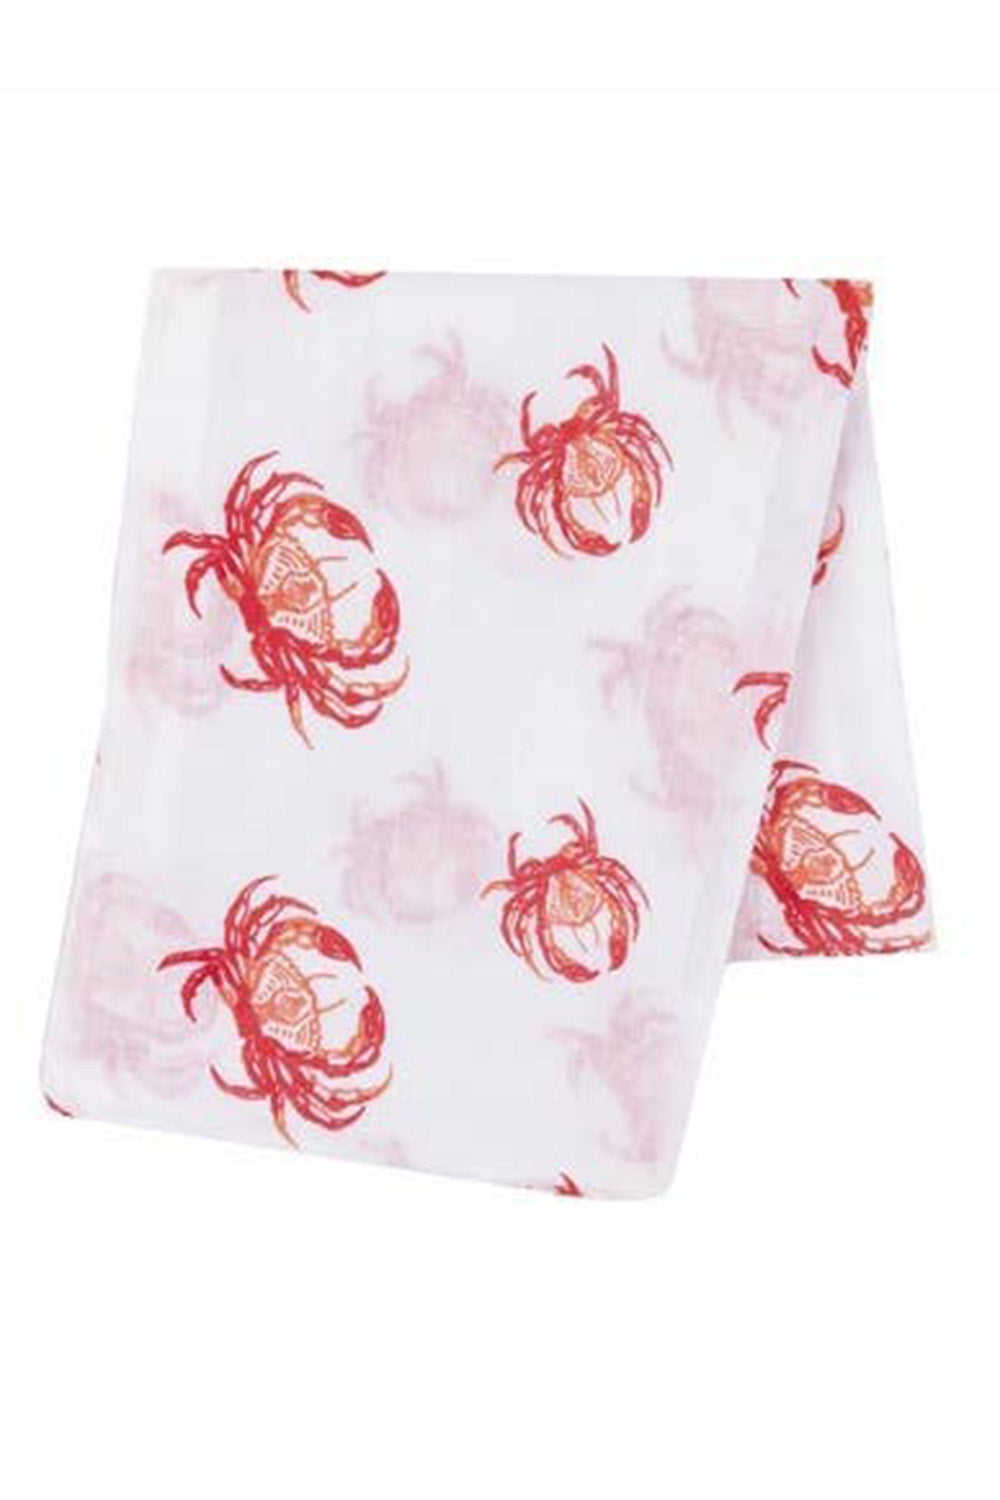 Hometown Swaddle Blanket - Pink Crab